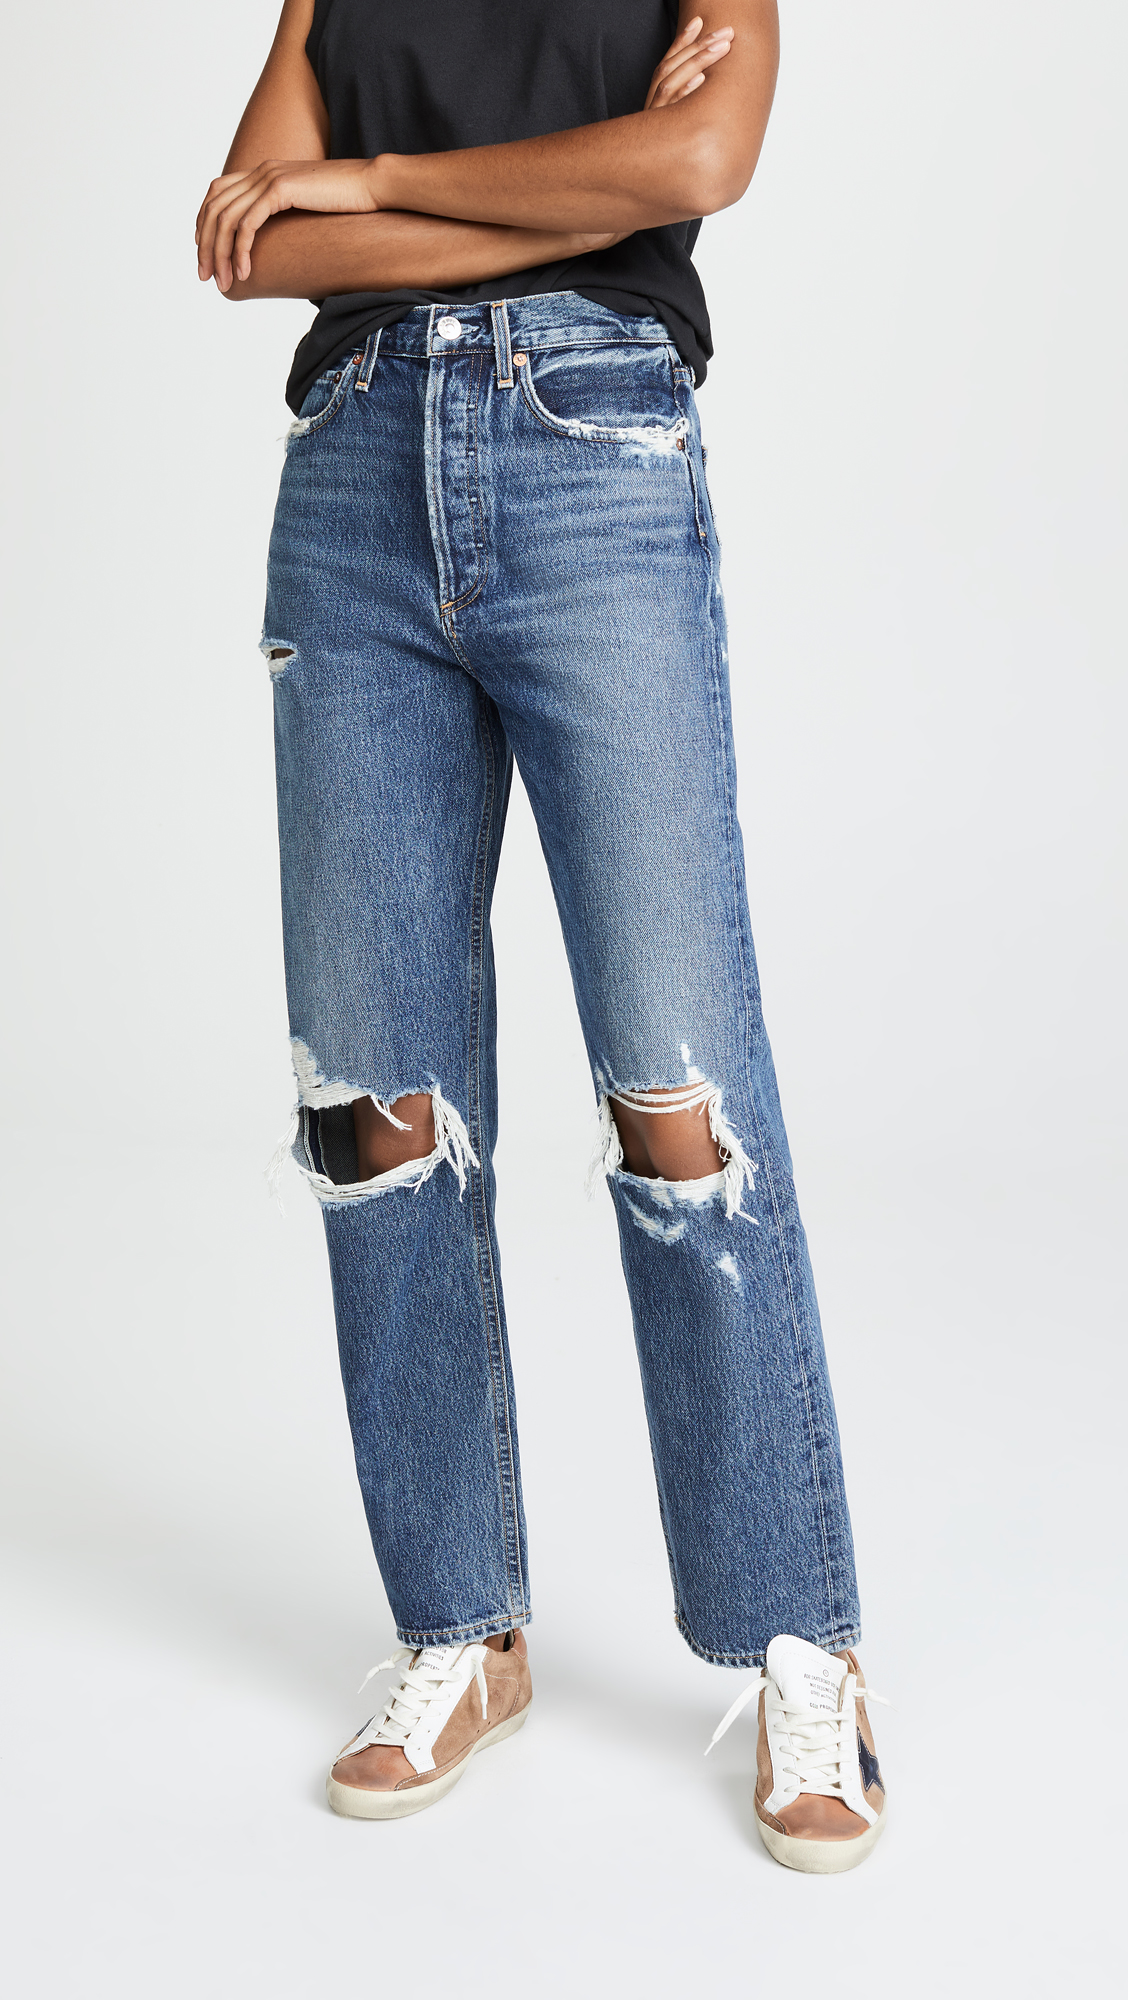 open jeans trend